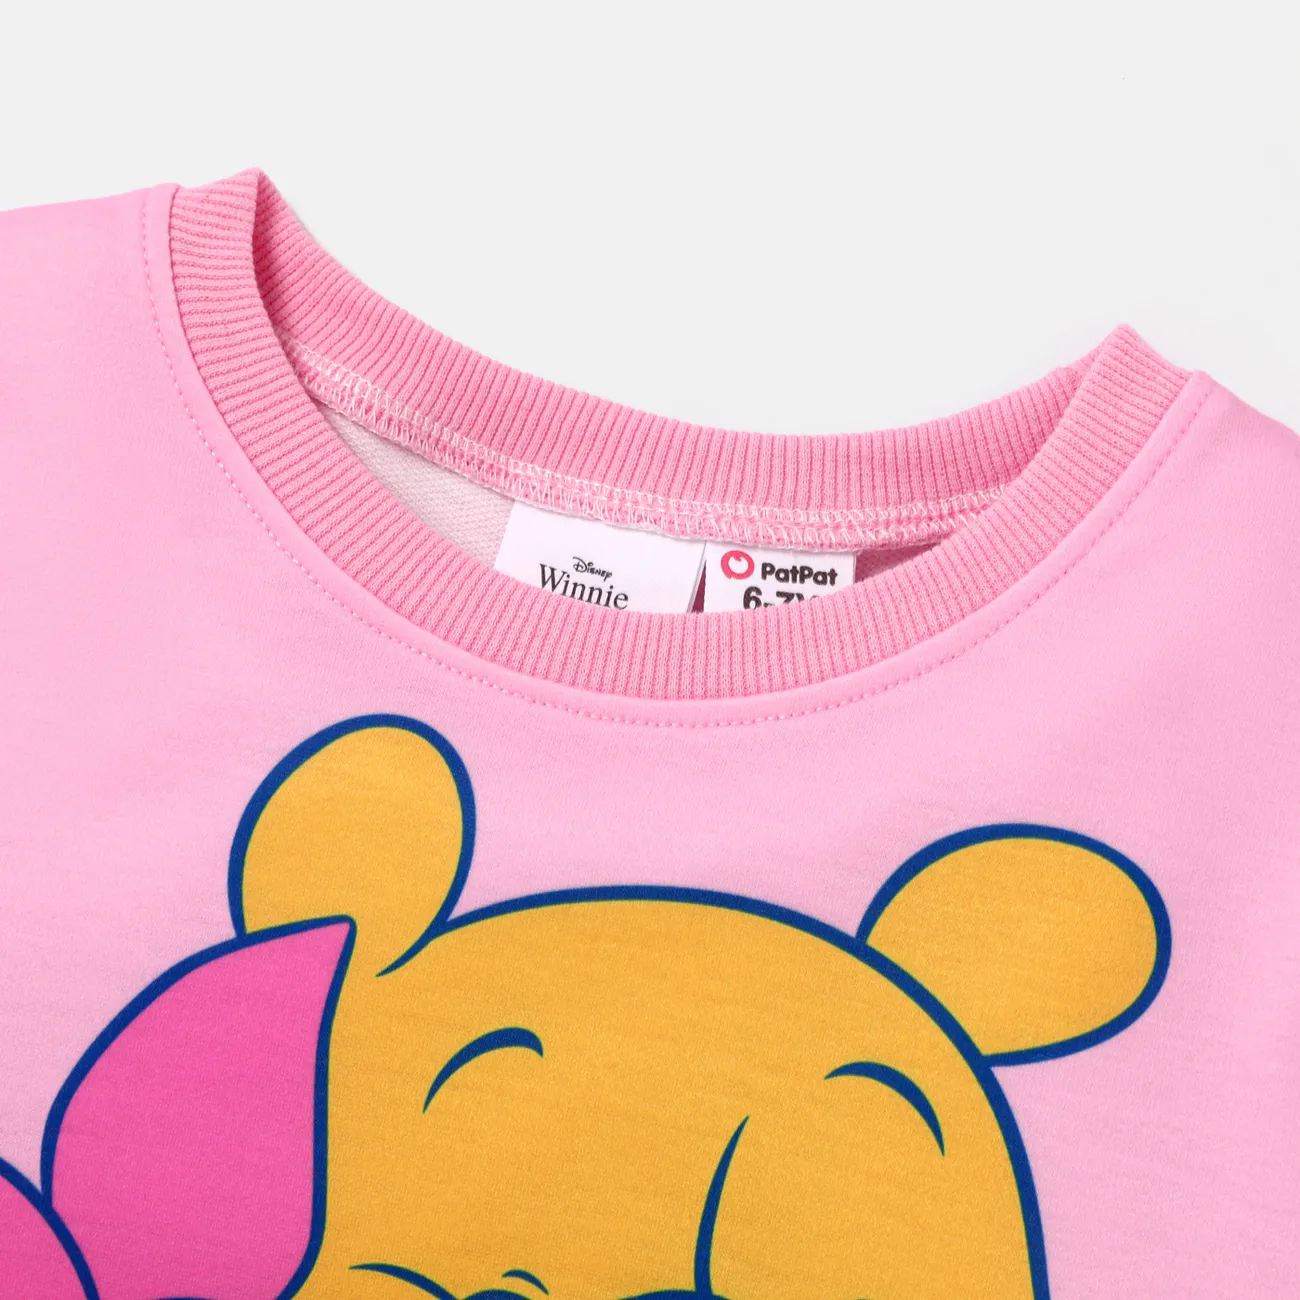 Disney Winnie the Pooh Kid Girl Character Print Long-sleeve Sweatshirt Pink big image 1